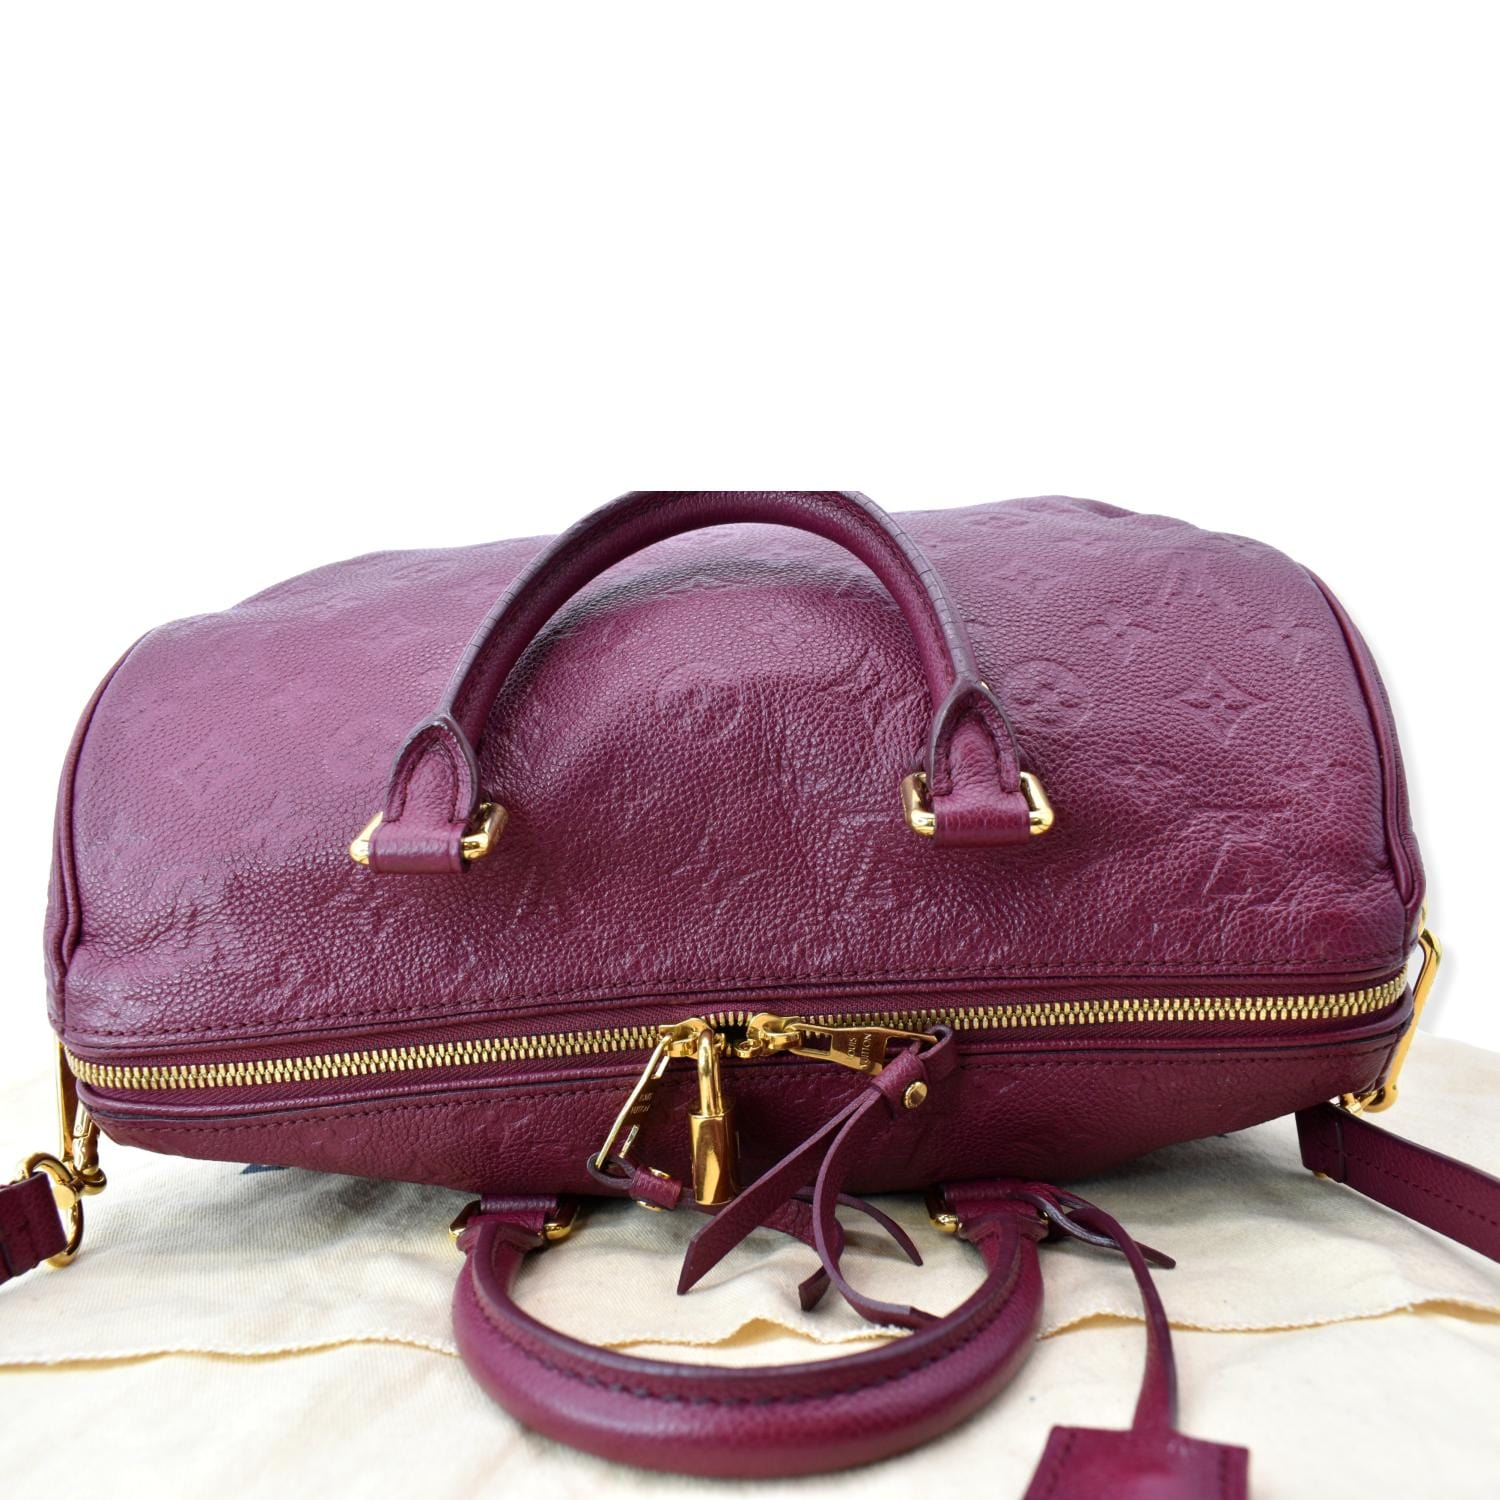 Louis Vuitton - Authenticated Speedy Bandoulière Handbag - Leather Burgundy Plain for Women, Very Good Condition